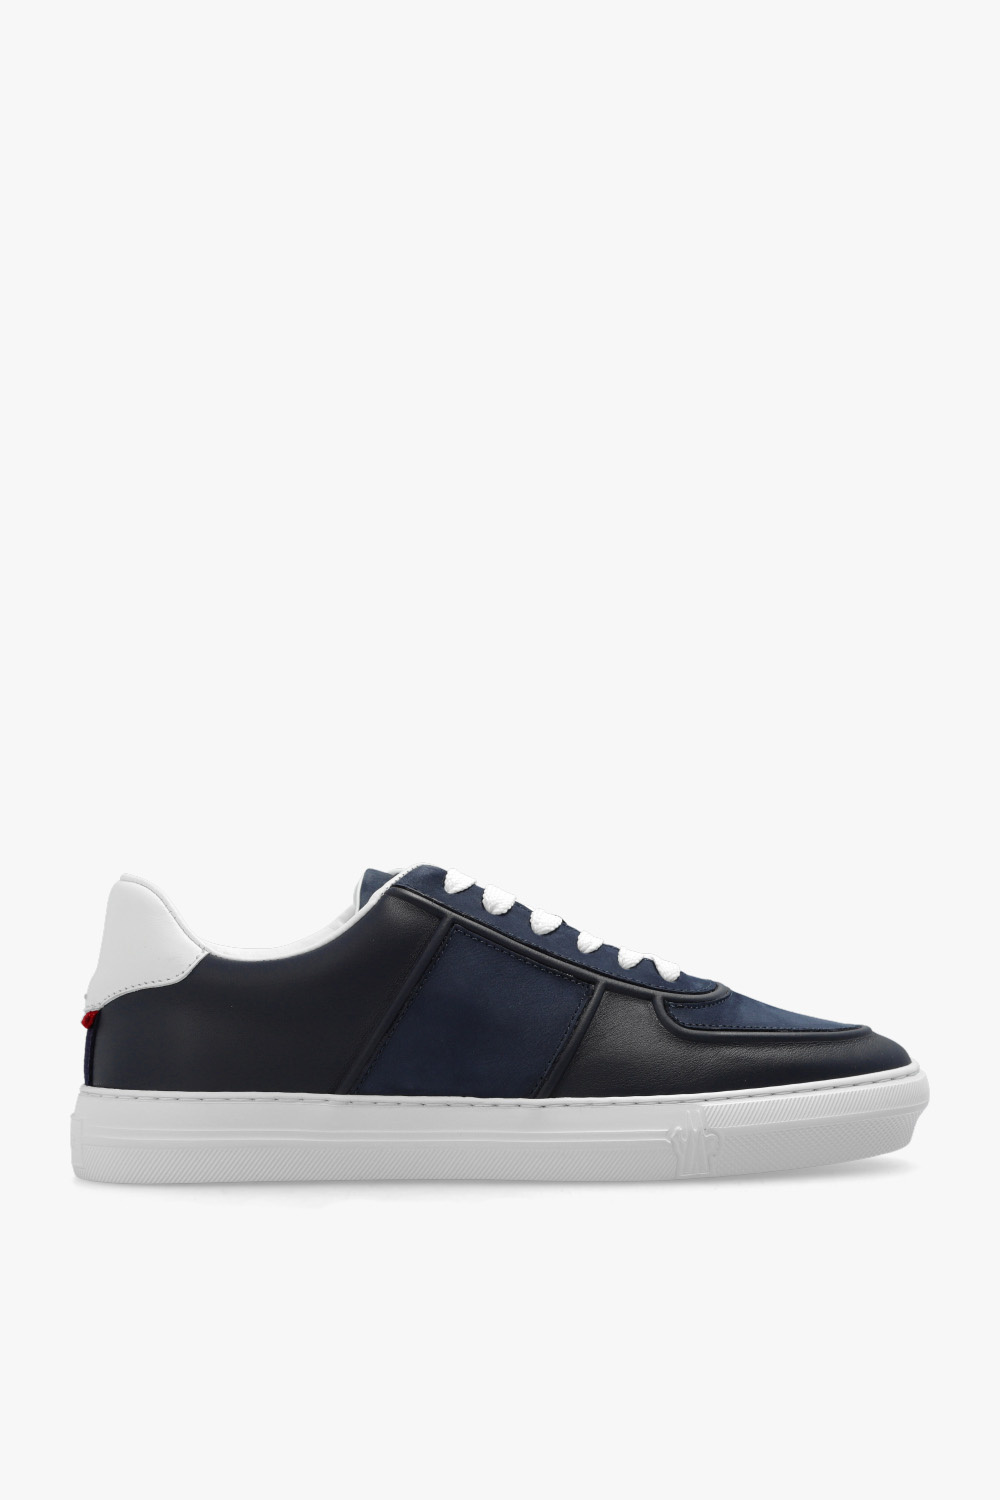 Moncler ‘Neue York’ sneakers